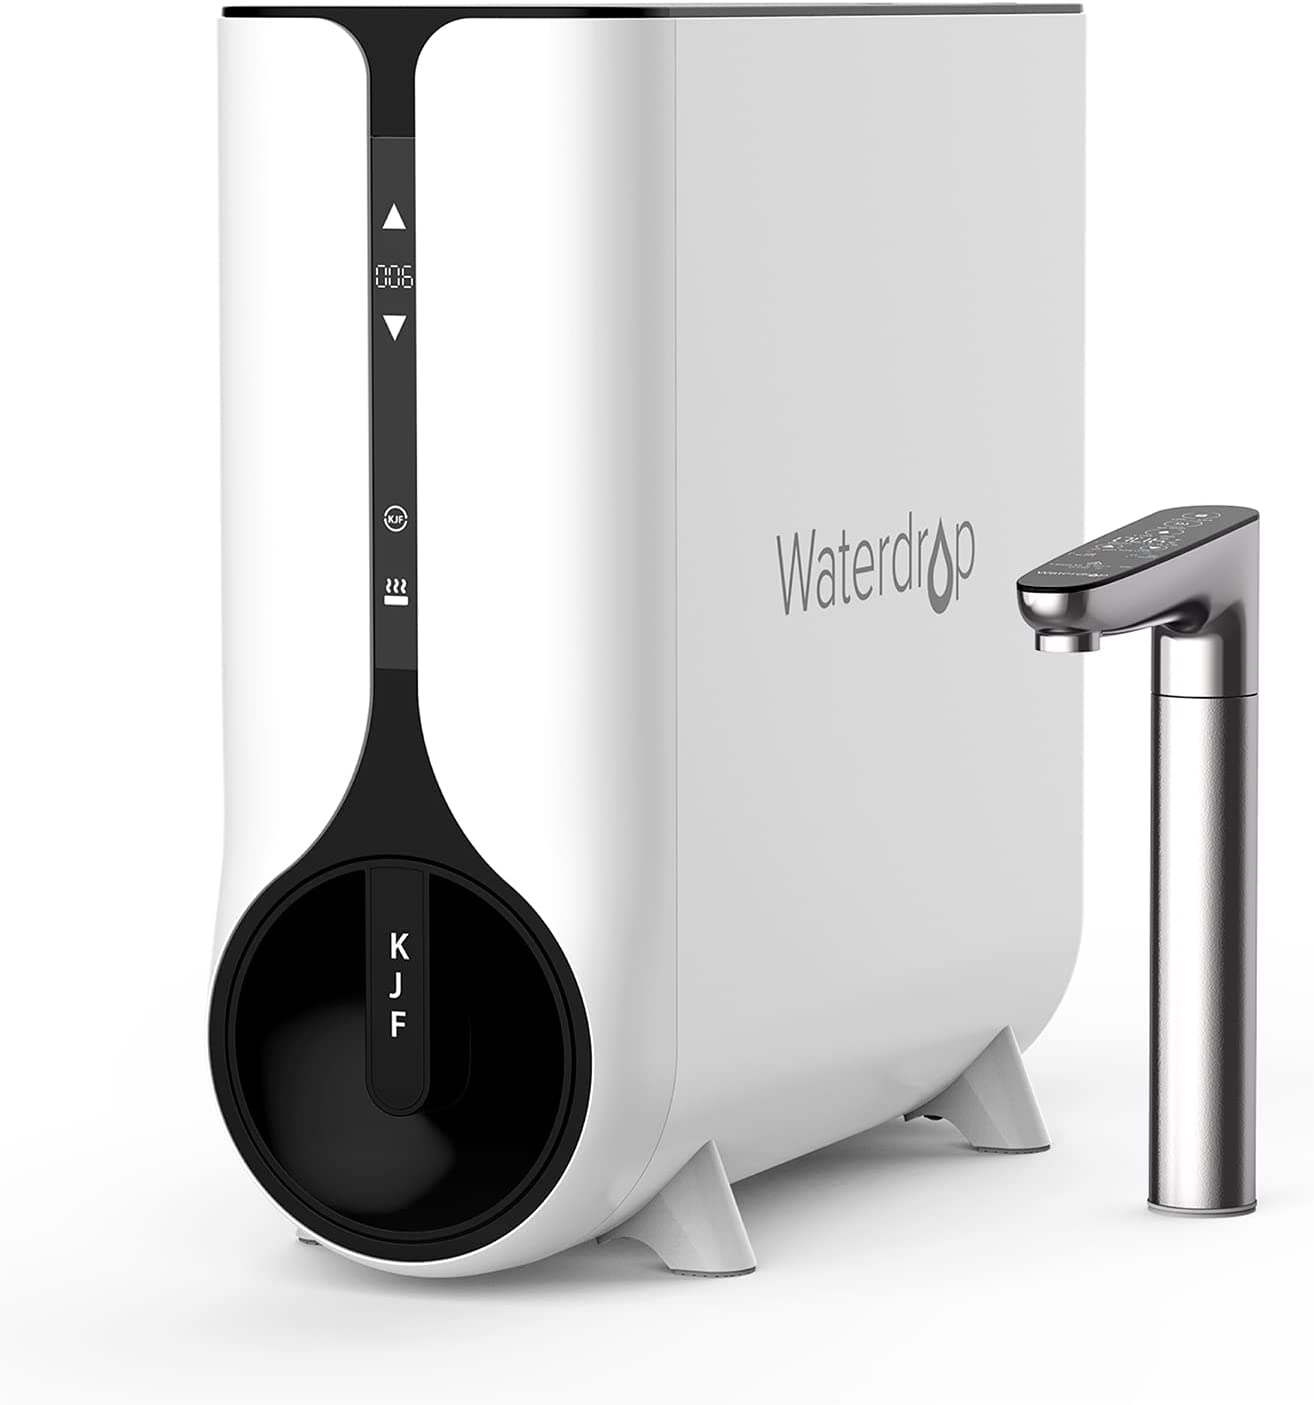 K6 Instant Hot Water Dispenser with KJF Filter - Waterdrop K6